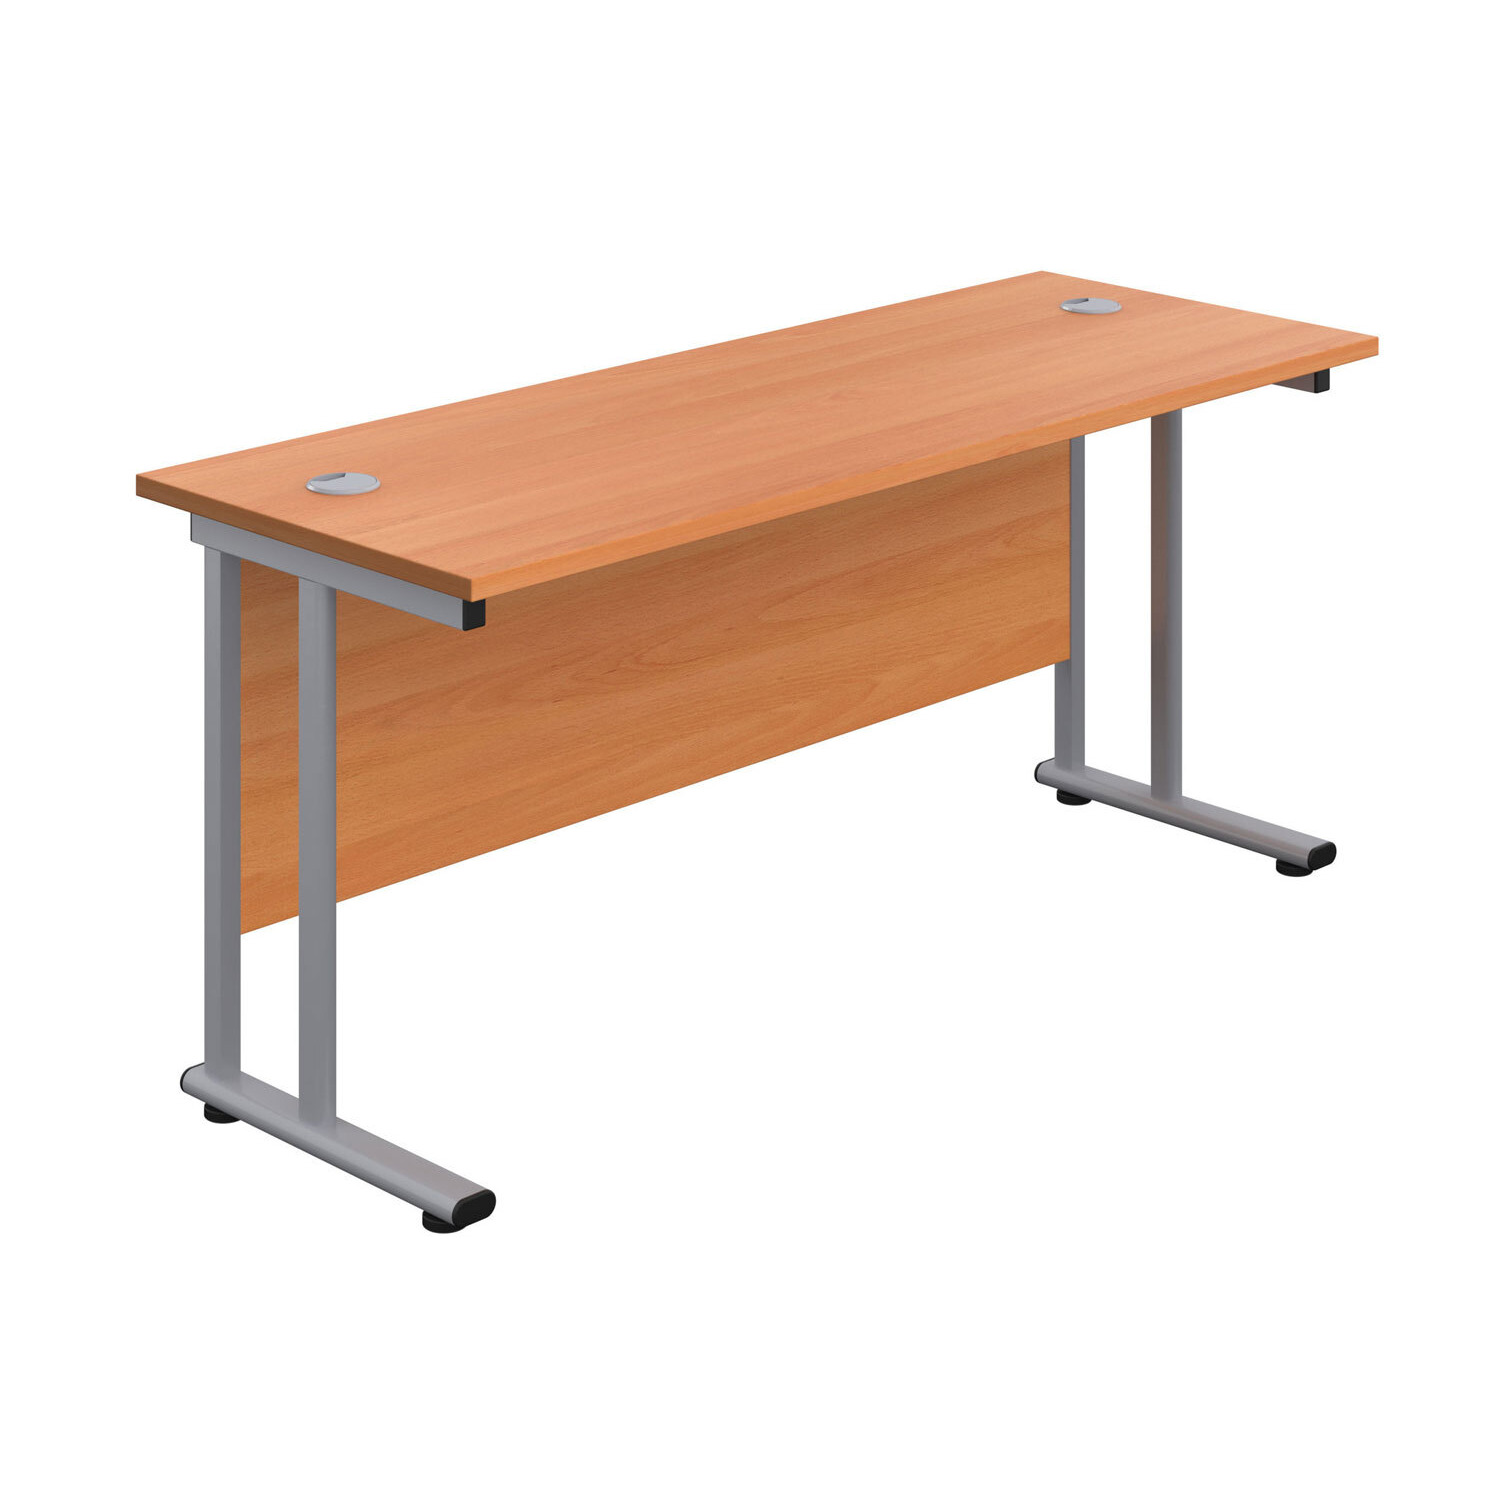 Impulse Narrow Rectangular Desk, 120wx60dx73h (cm), Silver/Warm Beech